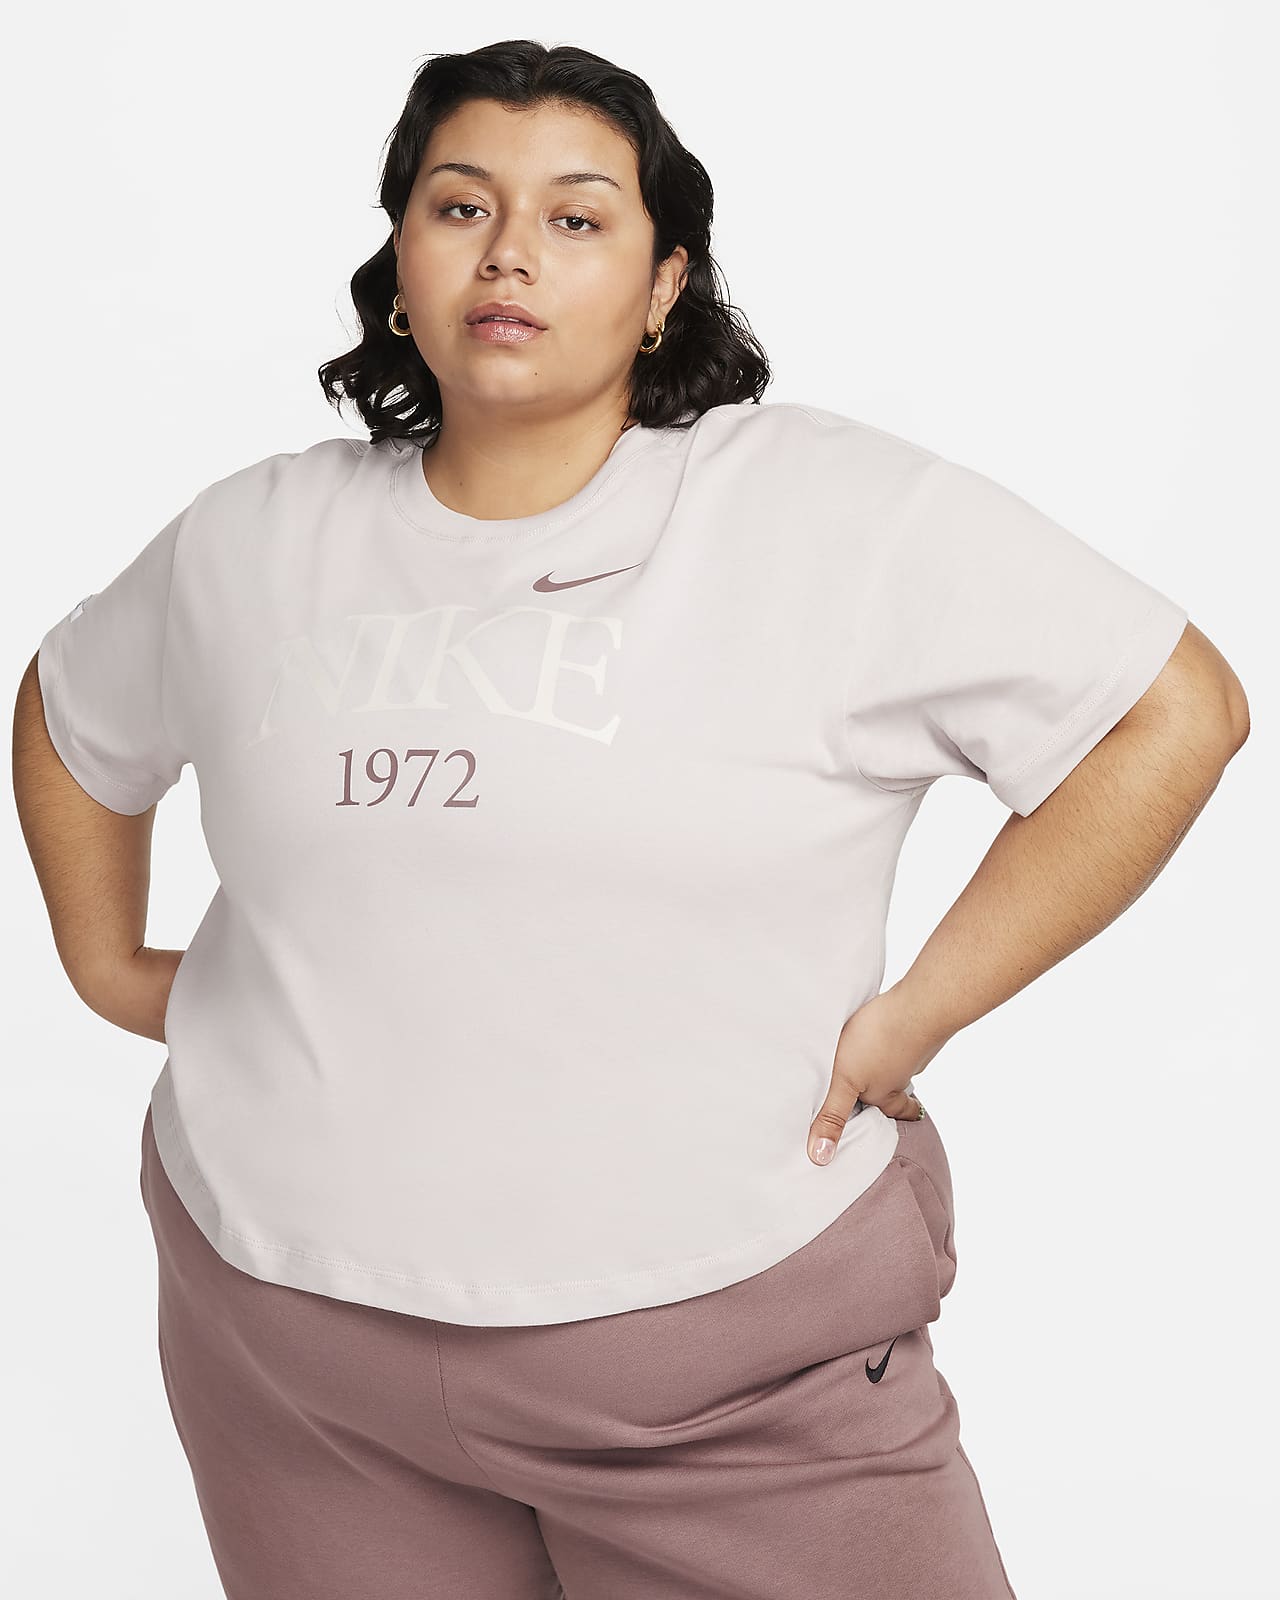 Nike Sportswear Klassisches Damen-T-Shirt (große Größe)